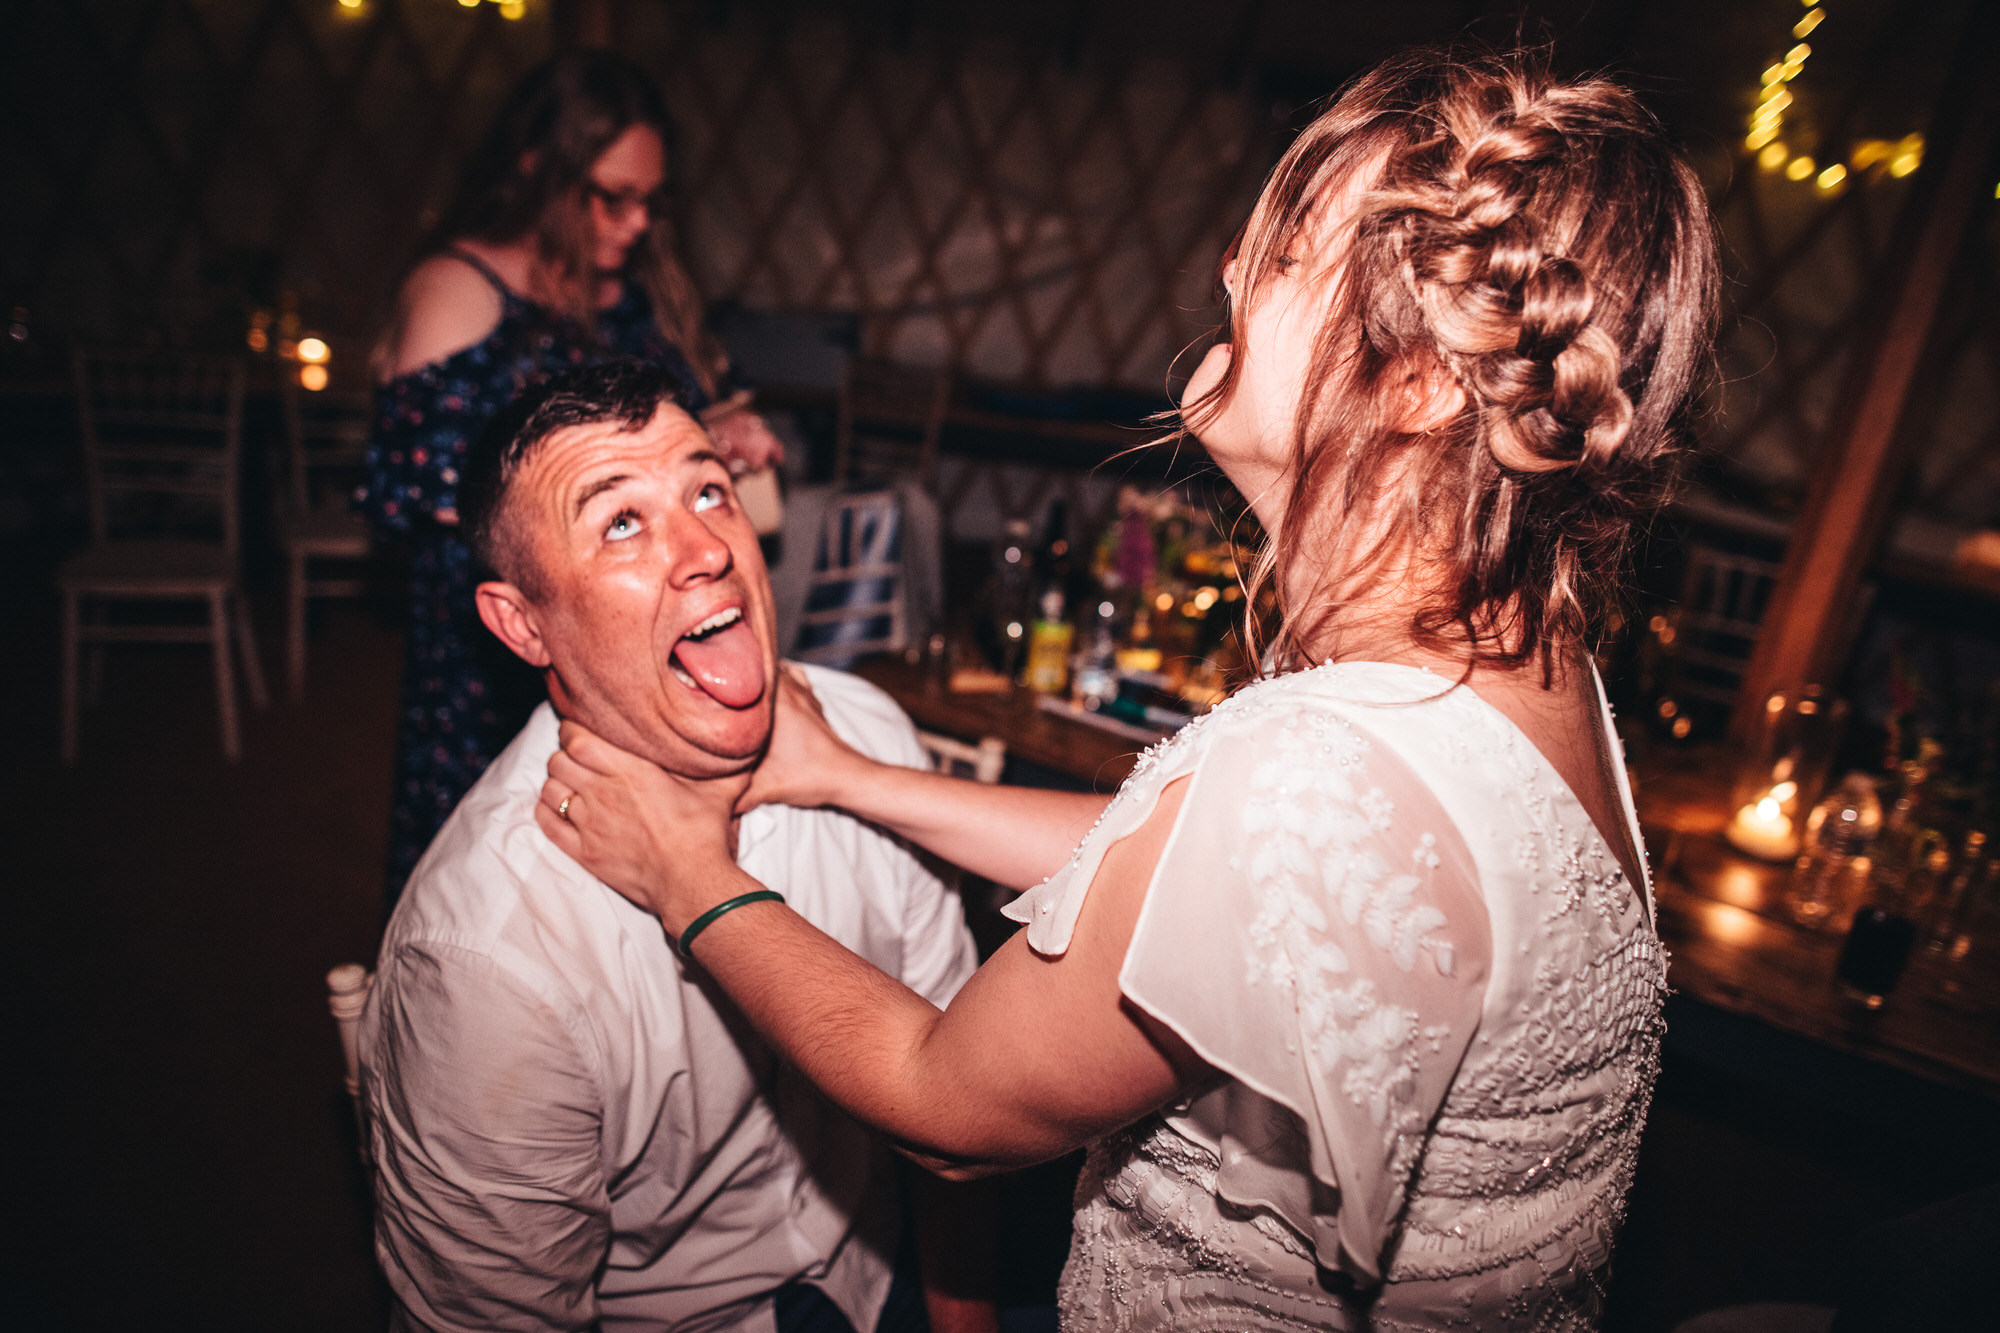 bride strangles groom in joking manner